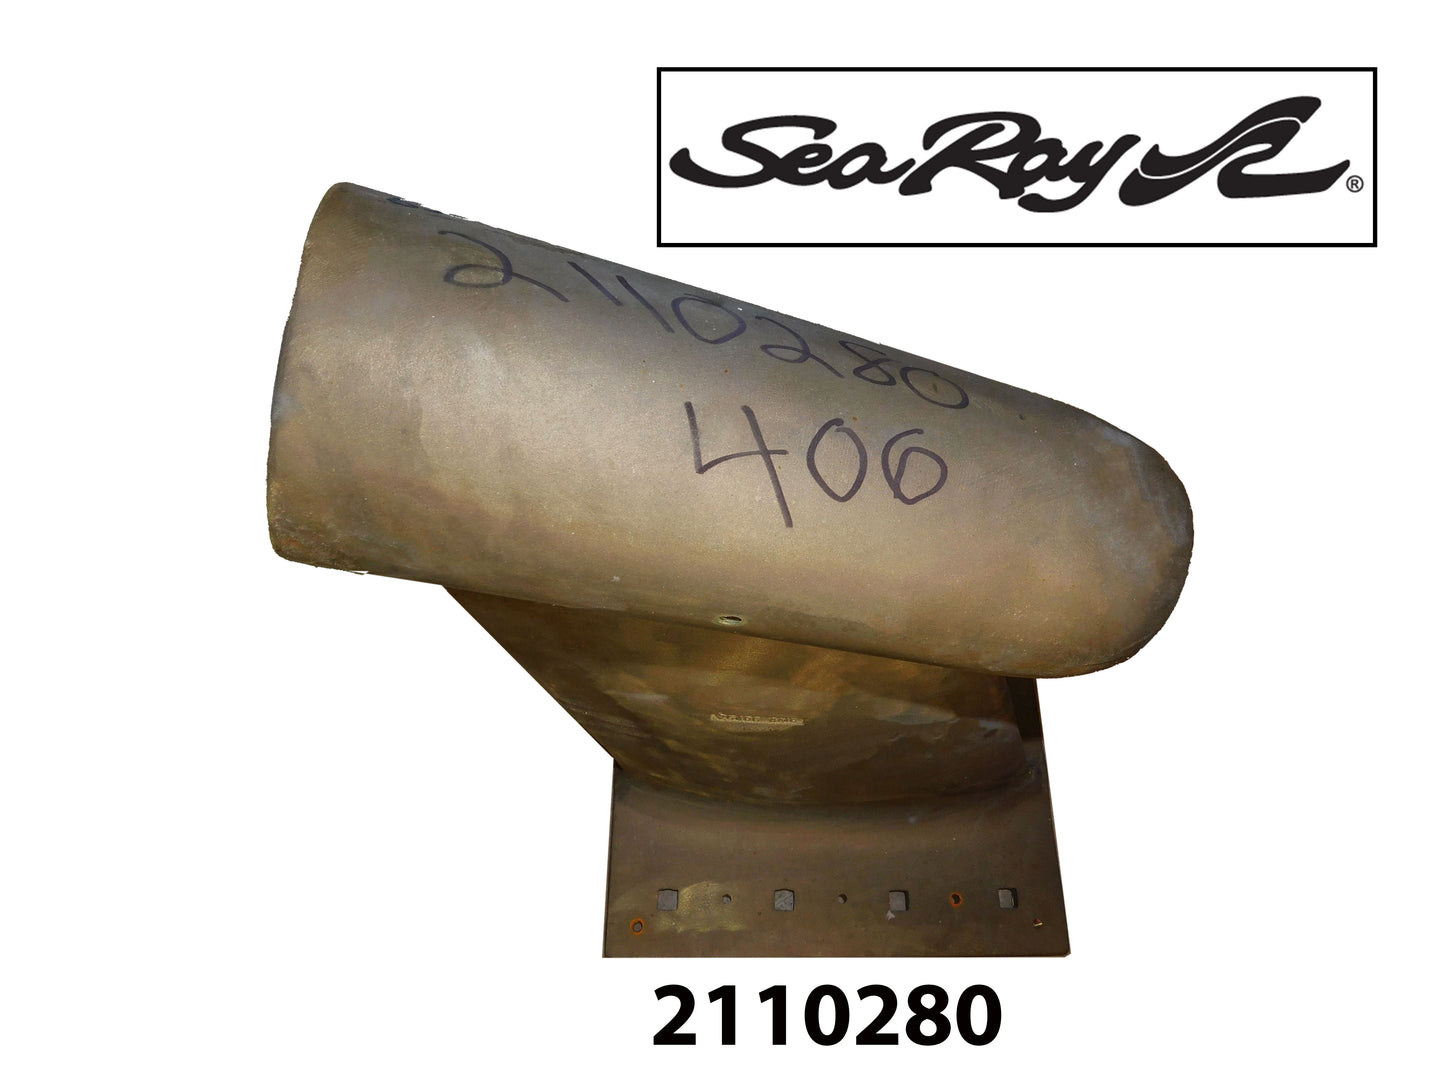 SeaRay 650 Shaft Strut 2110280